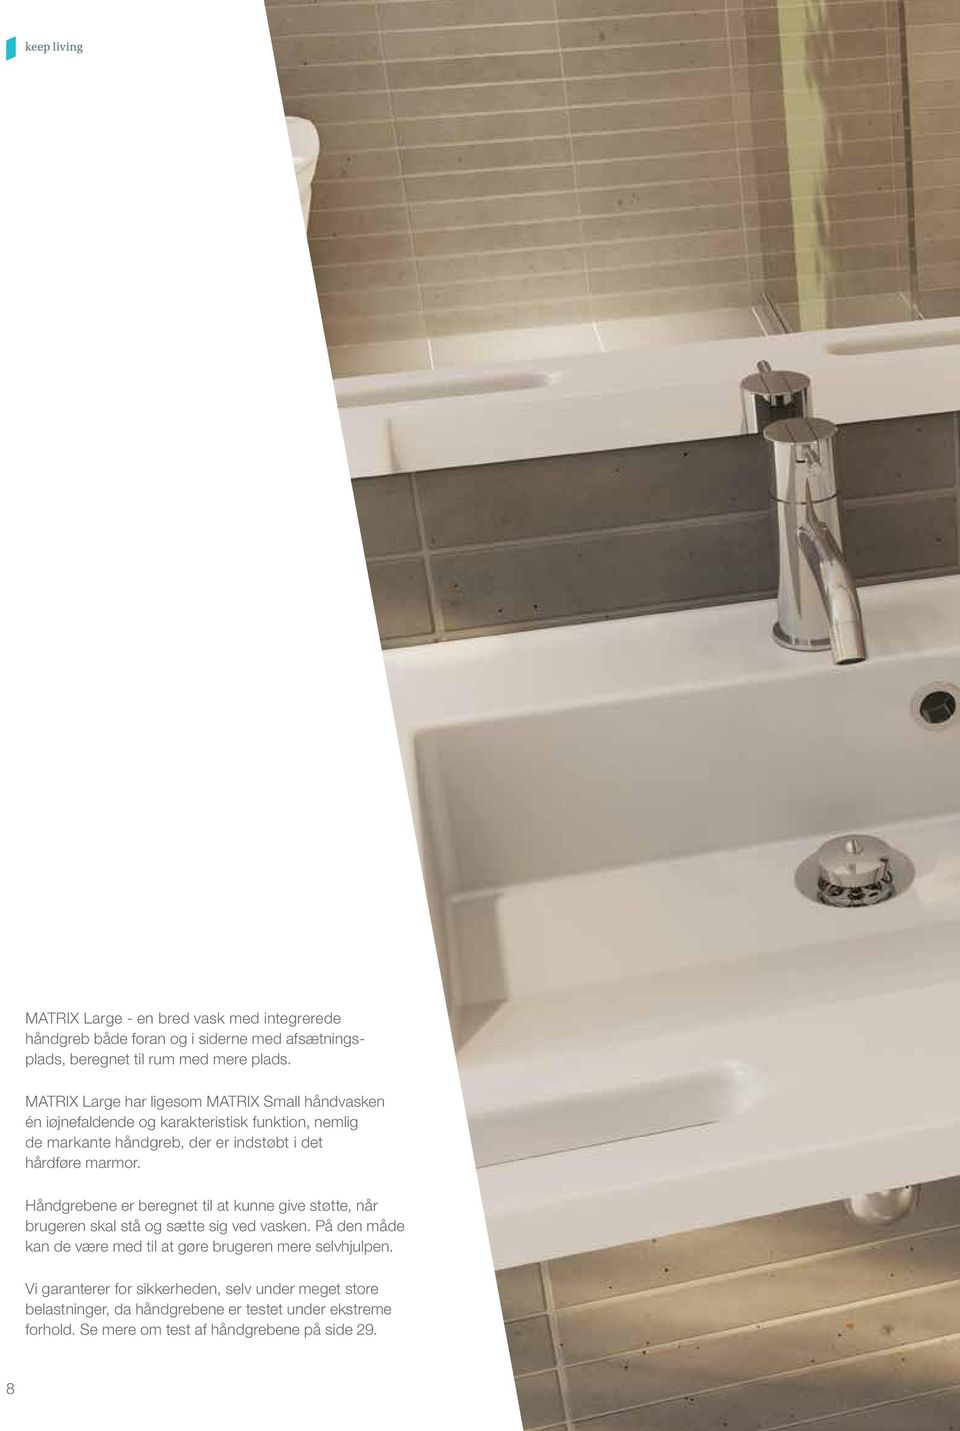 MATRIX perfekte håndvaske til ethvert behov - PDF Gratis download